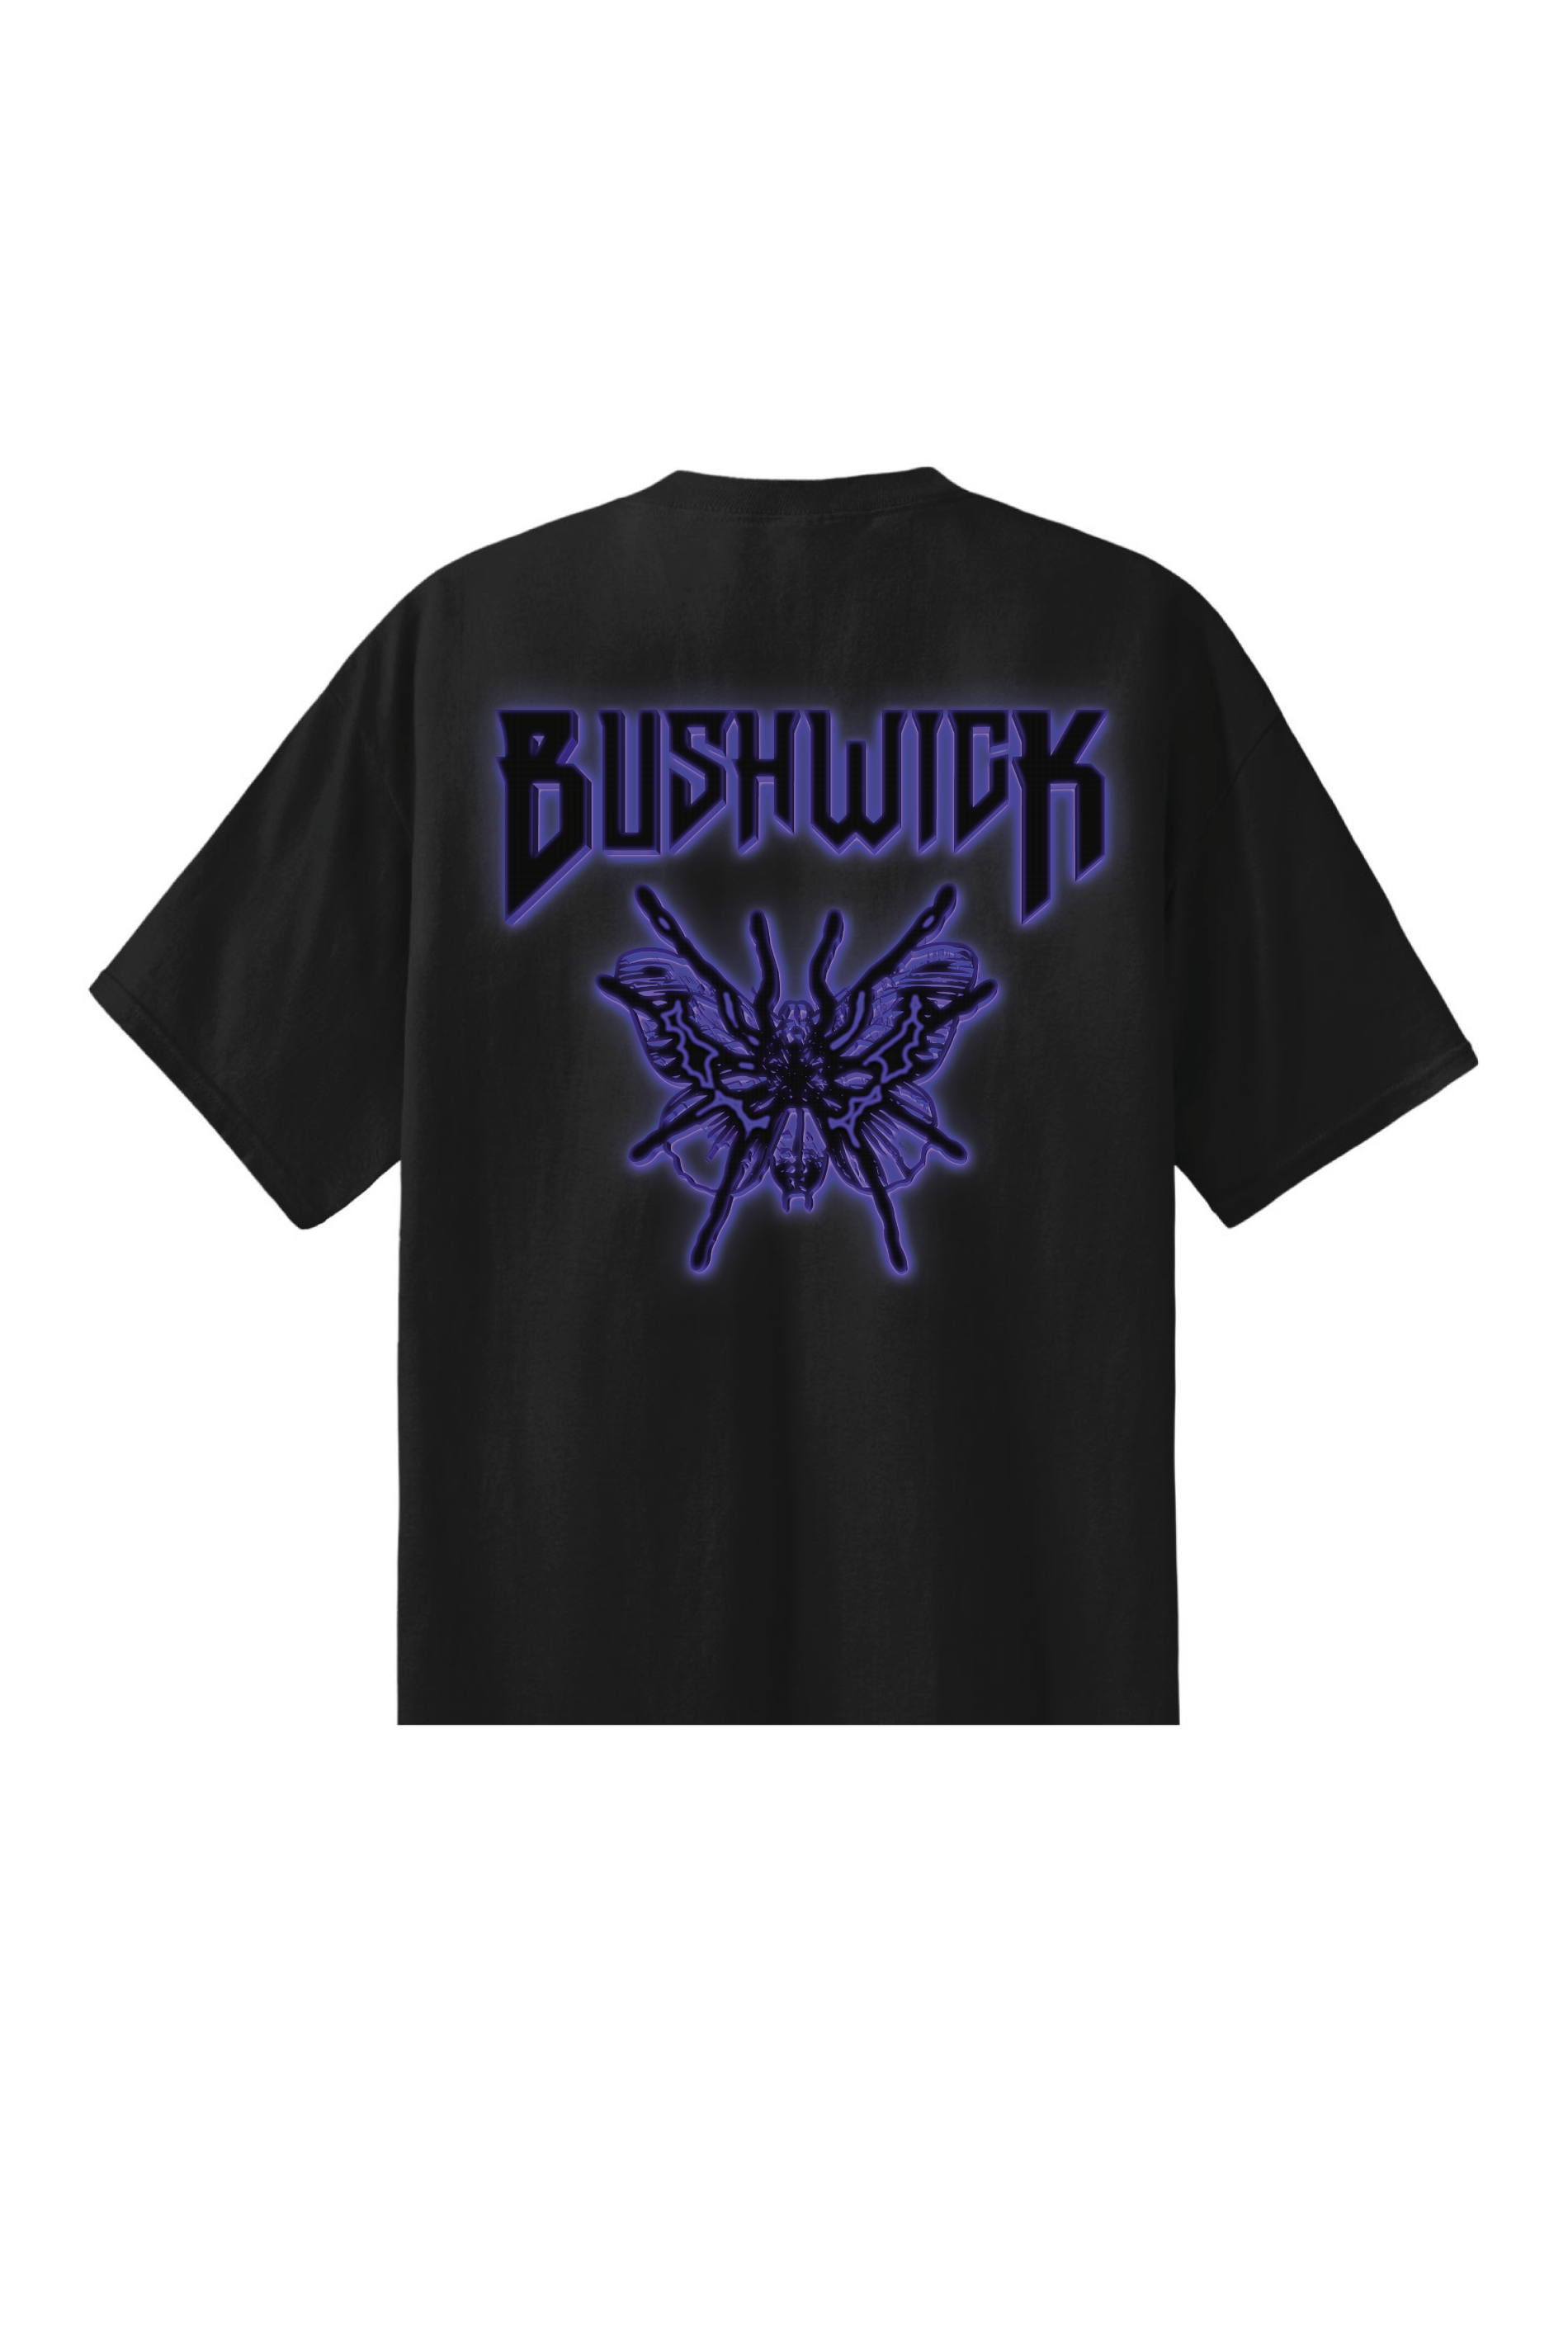 Bushwick T-Shirt uomo Butterfly